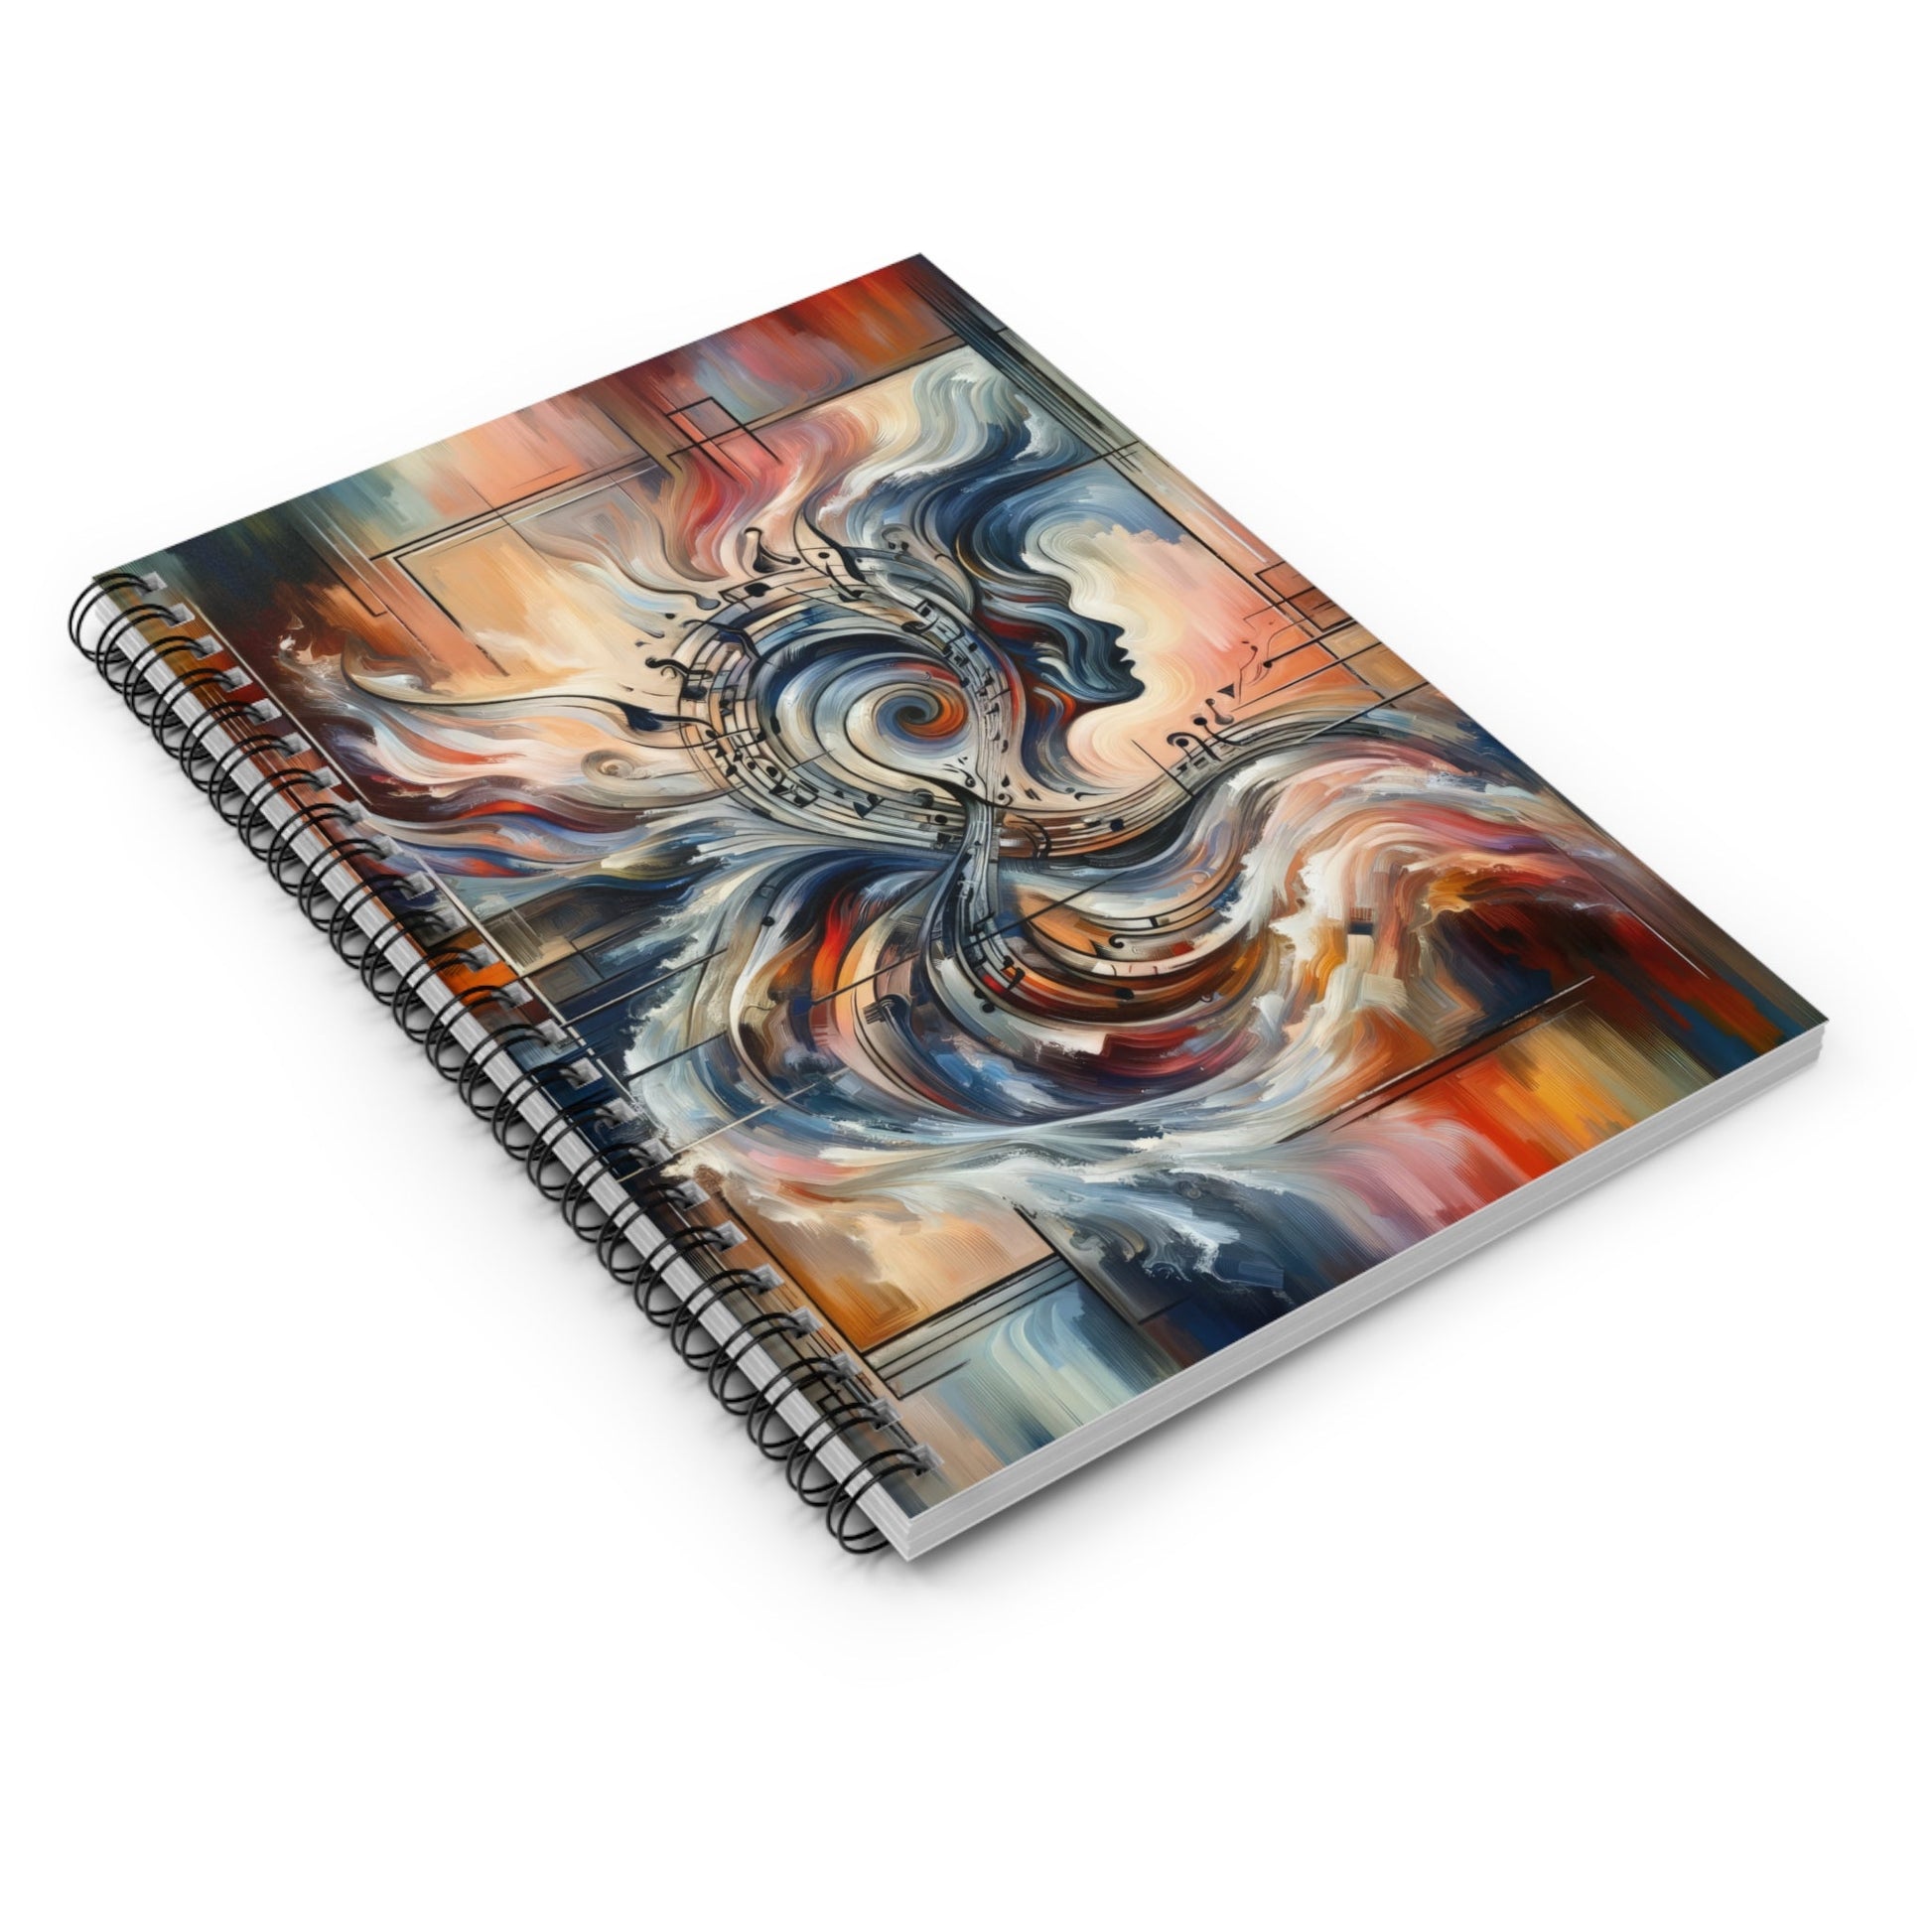 Symphonic Empathic Swirls Spiral Notebook - Ruled Line - ATUH.ART